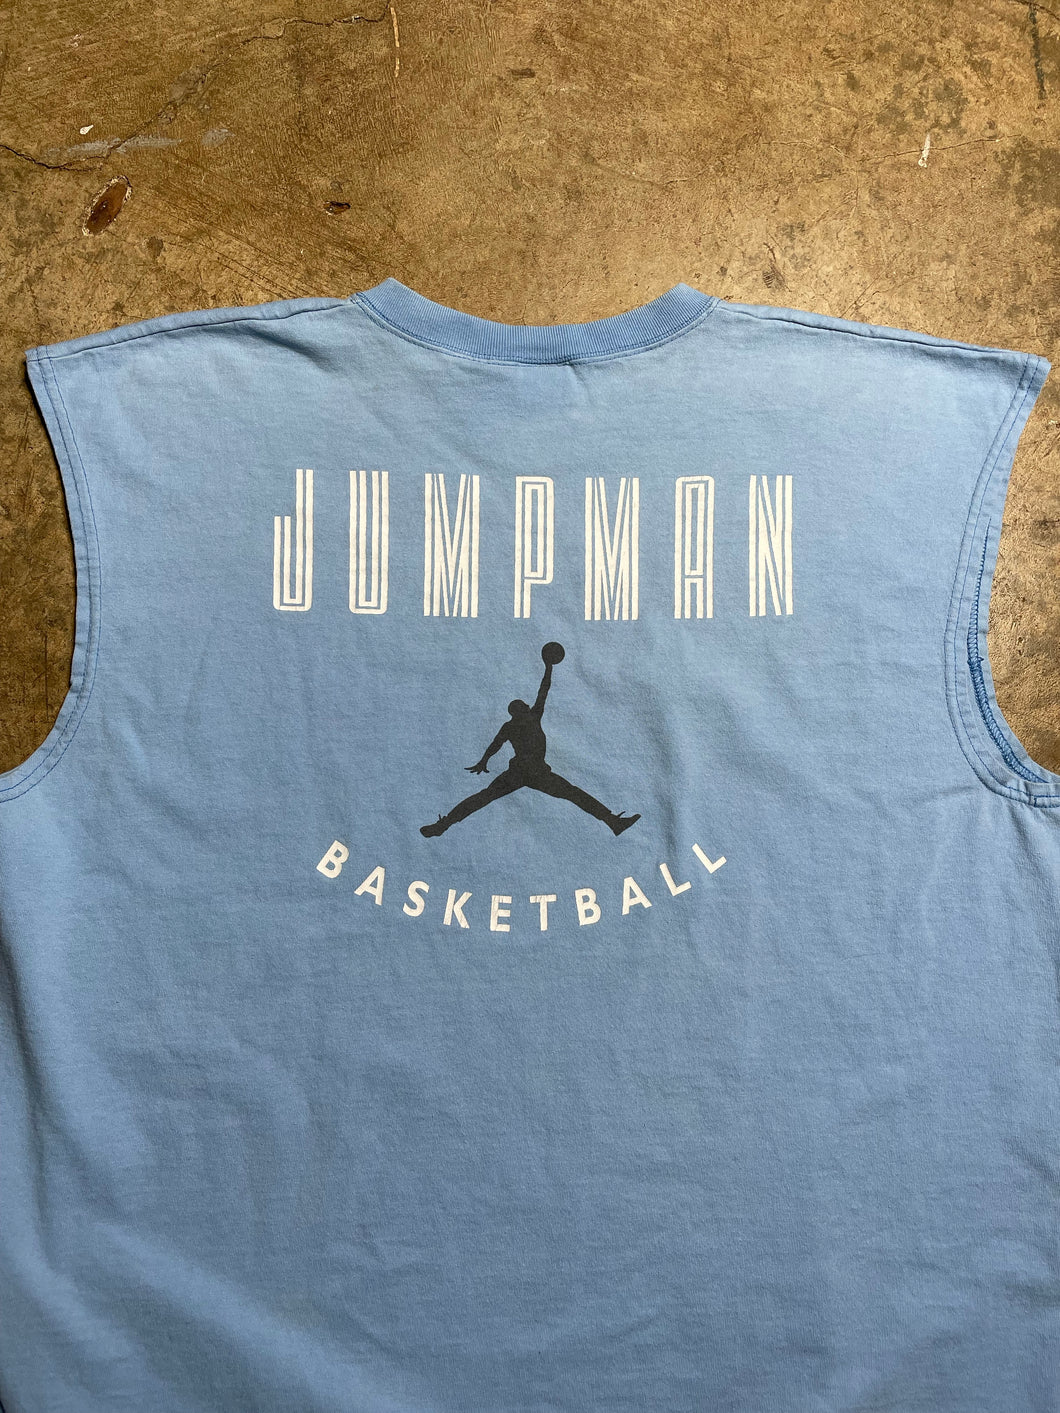 90’s Nike Jumpman Basketball Sleeveless Tee - XL